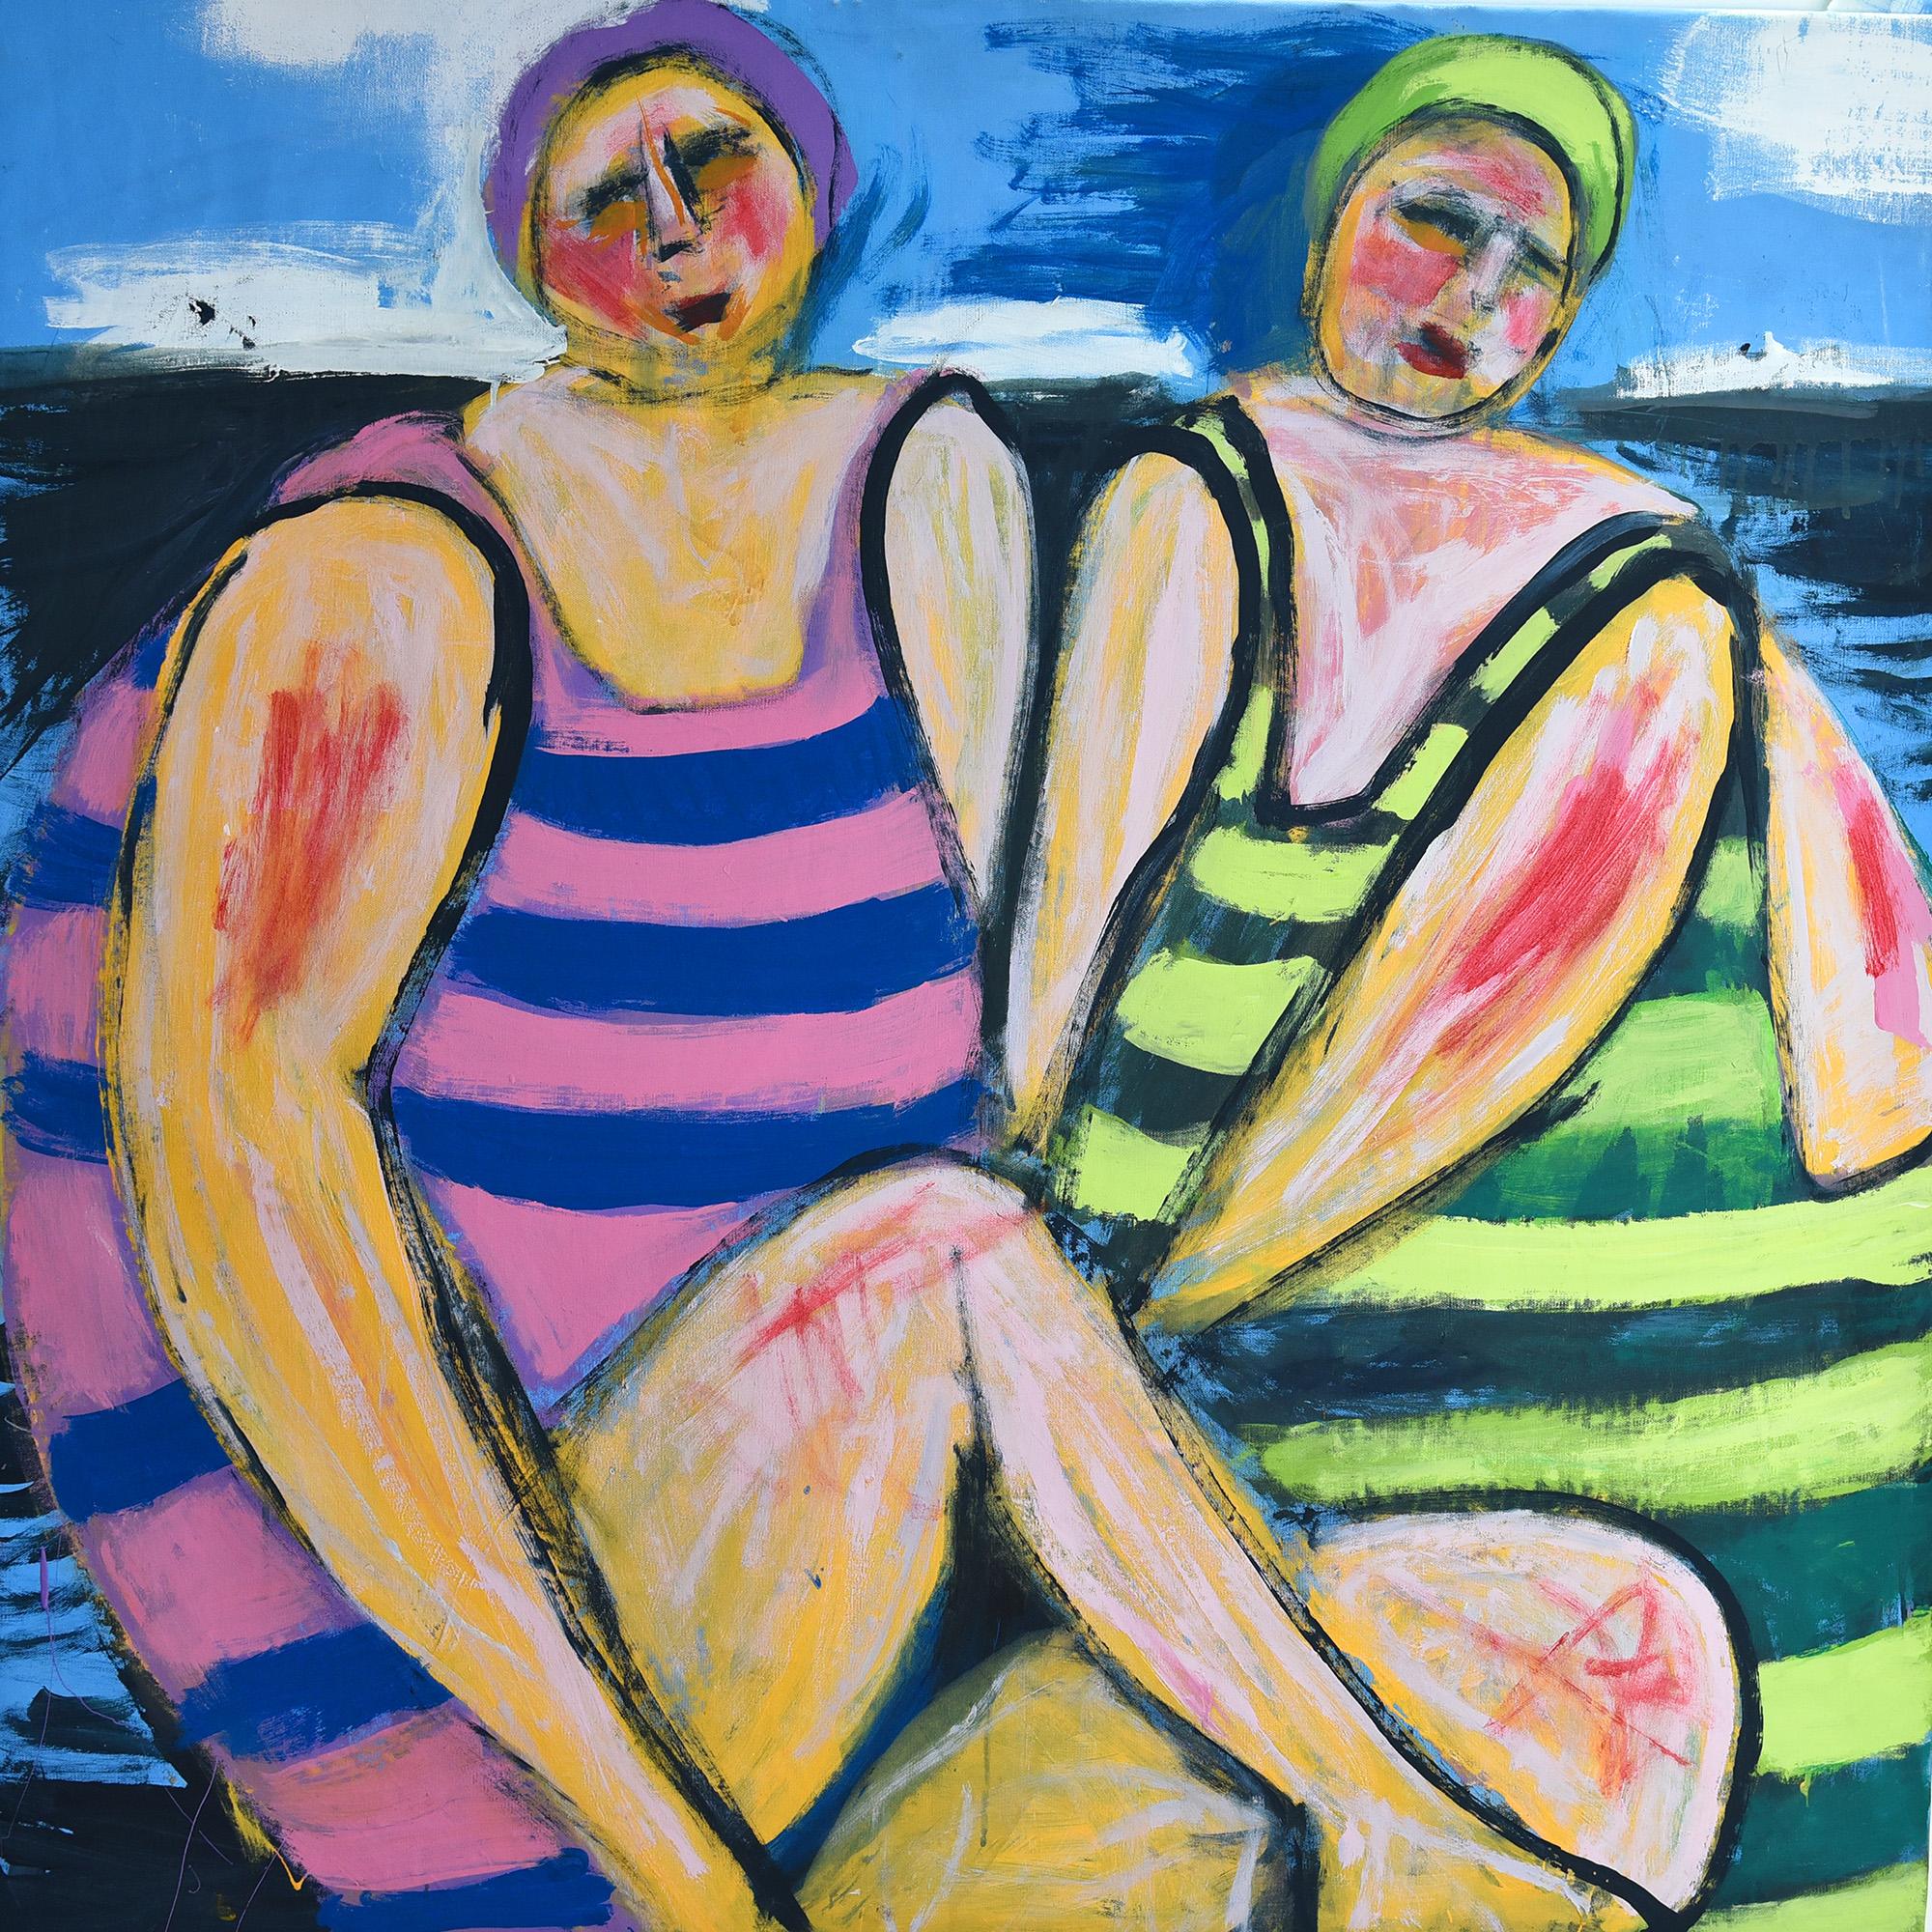 Peter Otfinoski Figurative Painting - 'Big Bathers' Figurative Female Bathers Painting